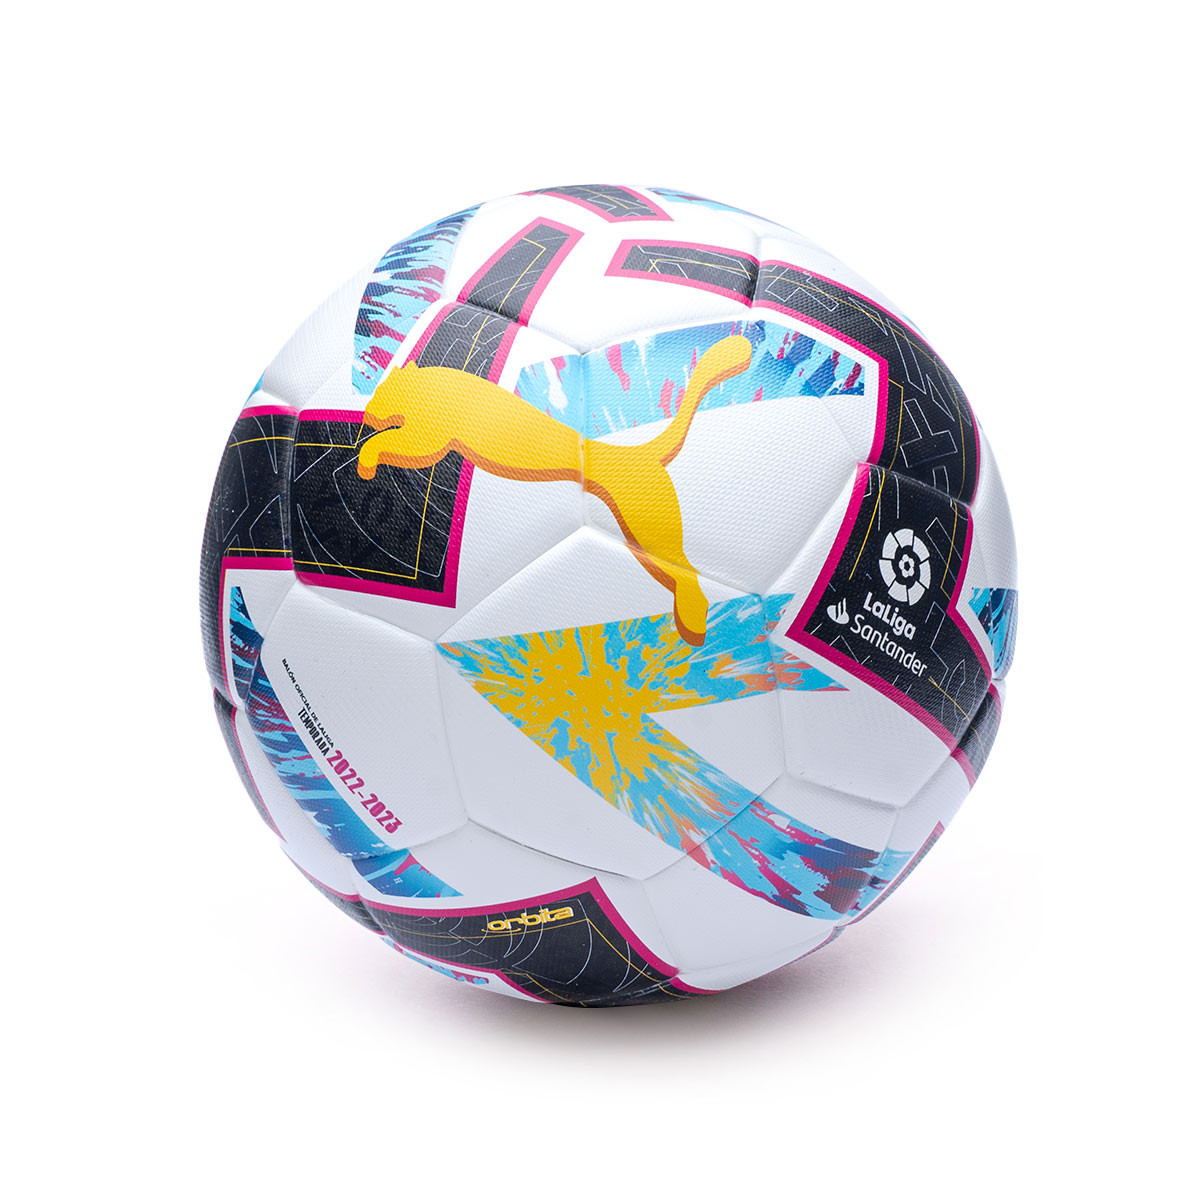  Puma La Liga 1 Accelerate Quality Ball : Deportes y Actividades  al Aire Libre